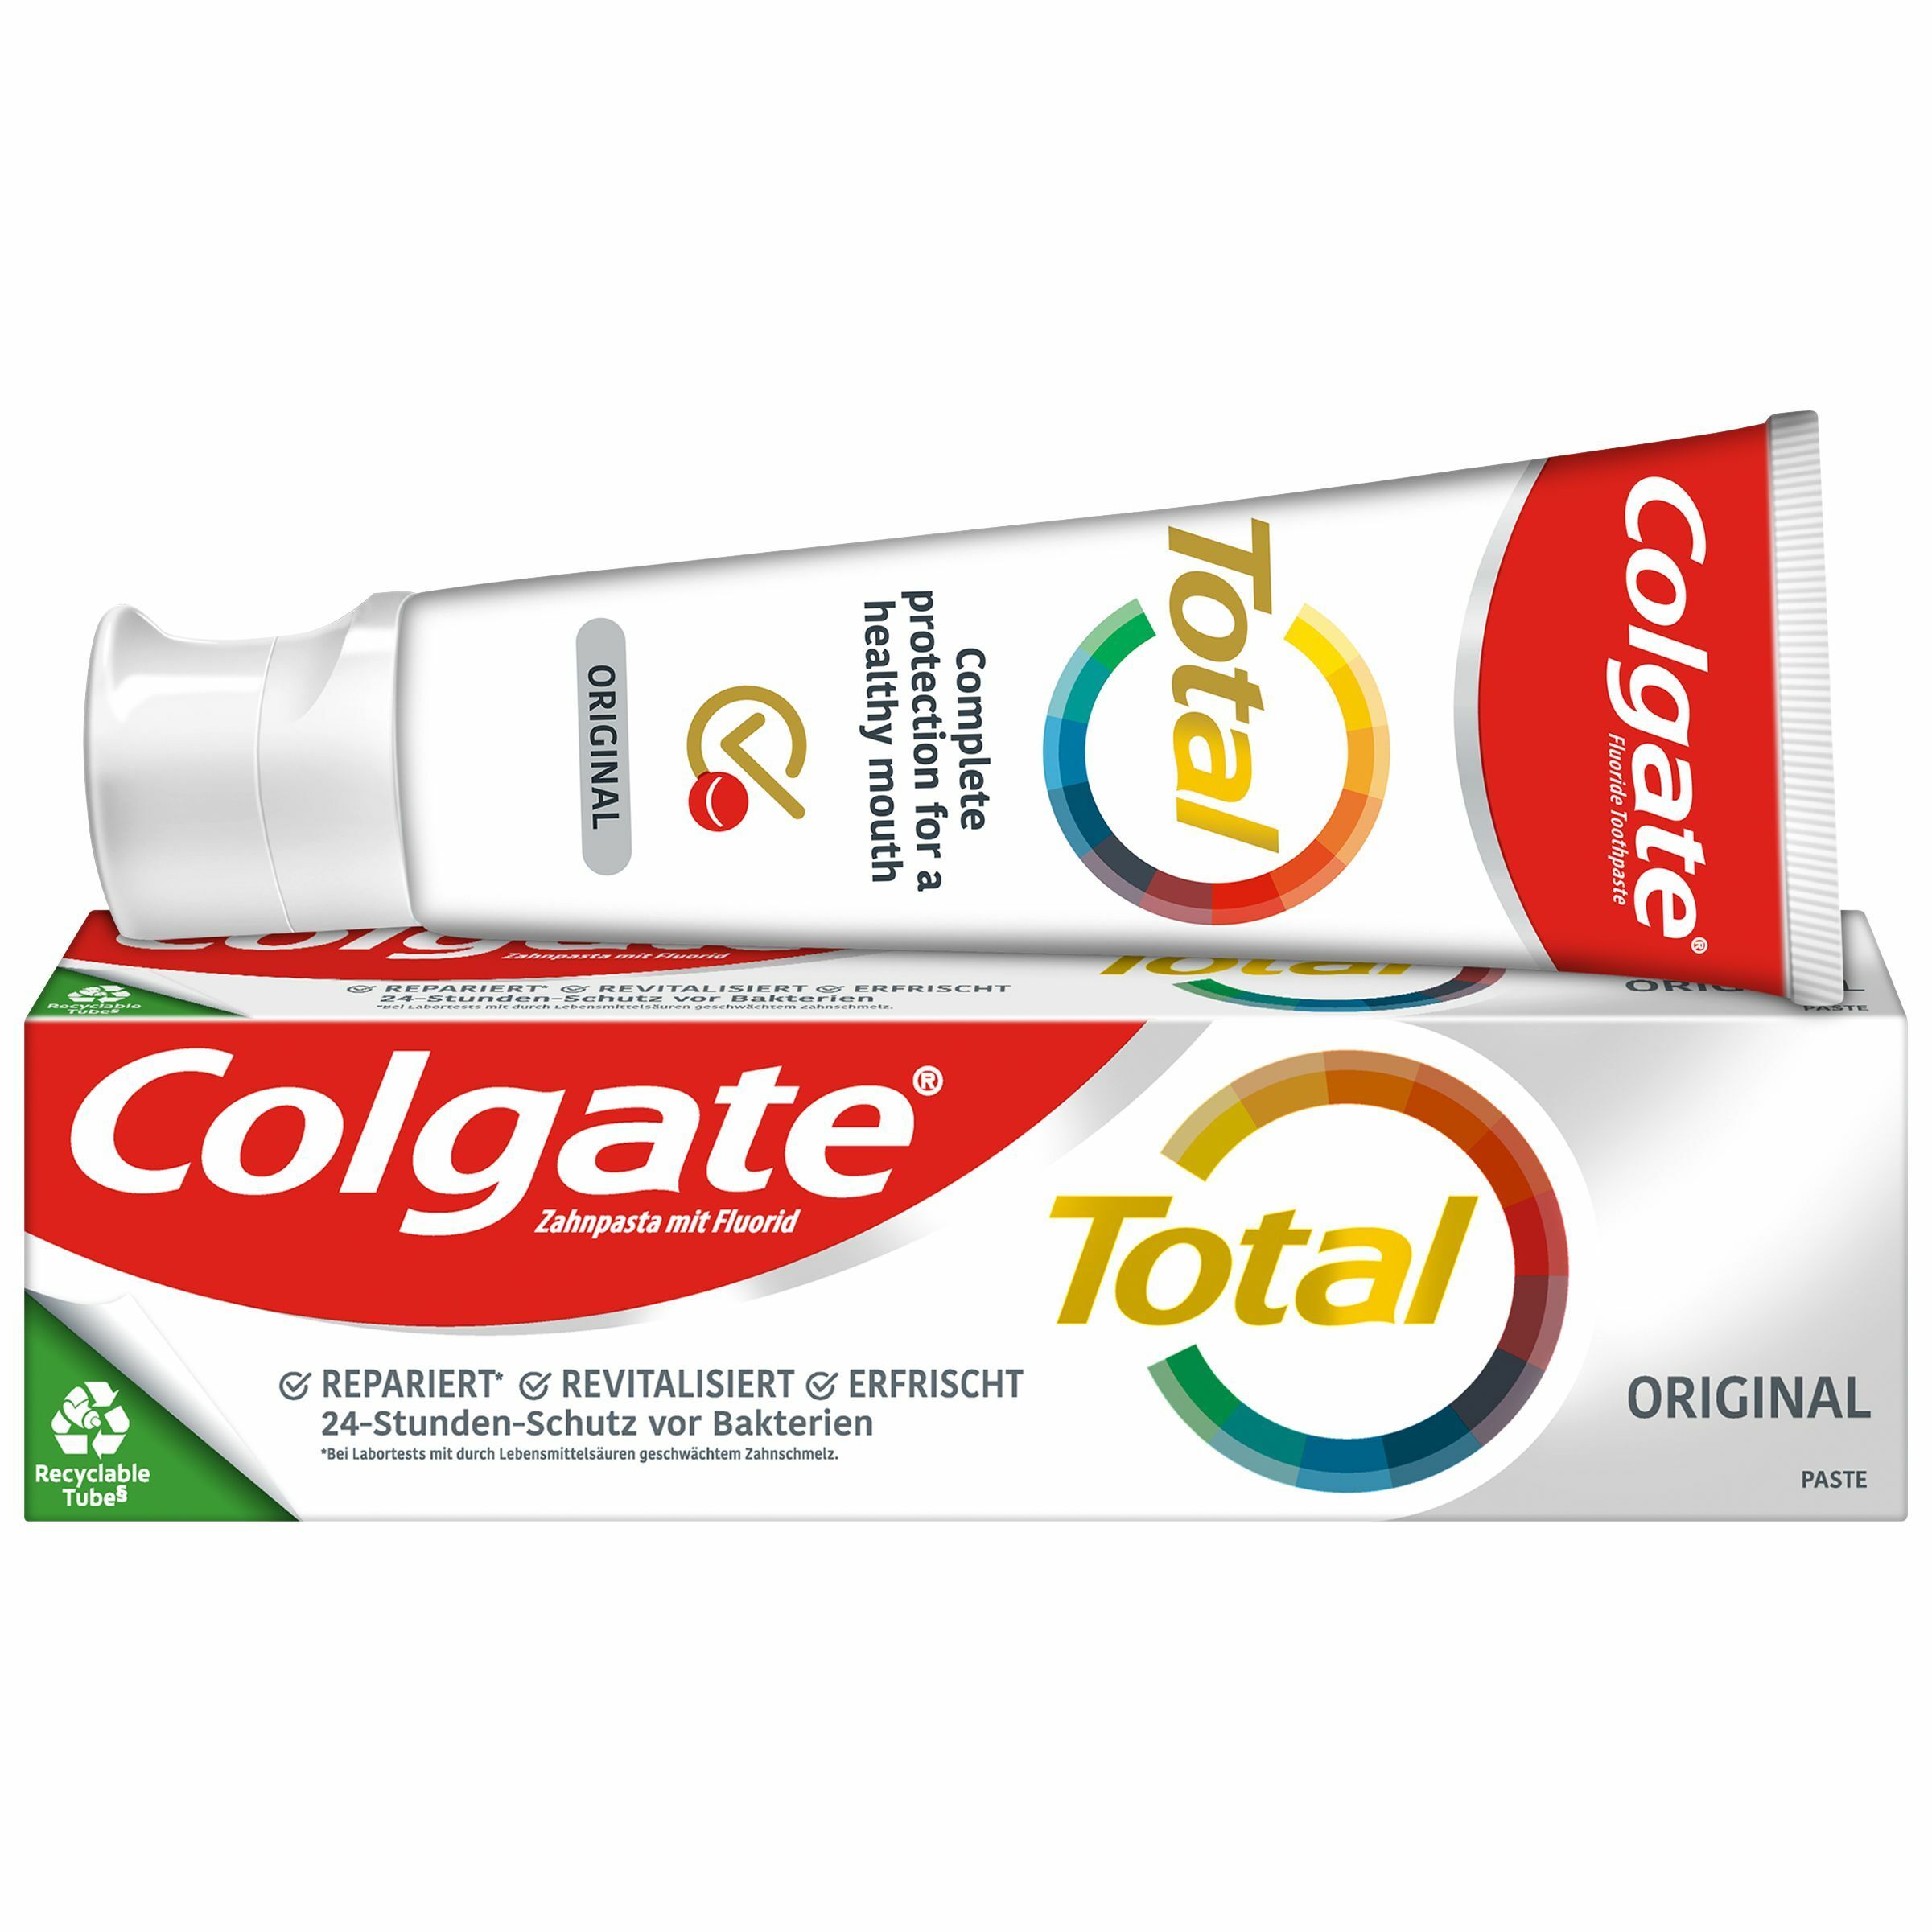 Image of Colgate Total Original Zahnpasta